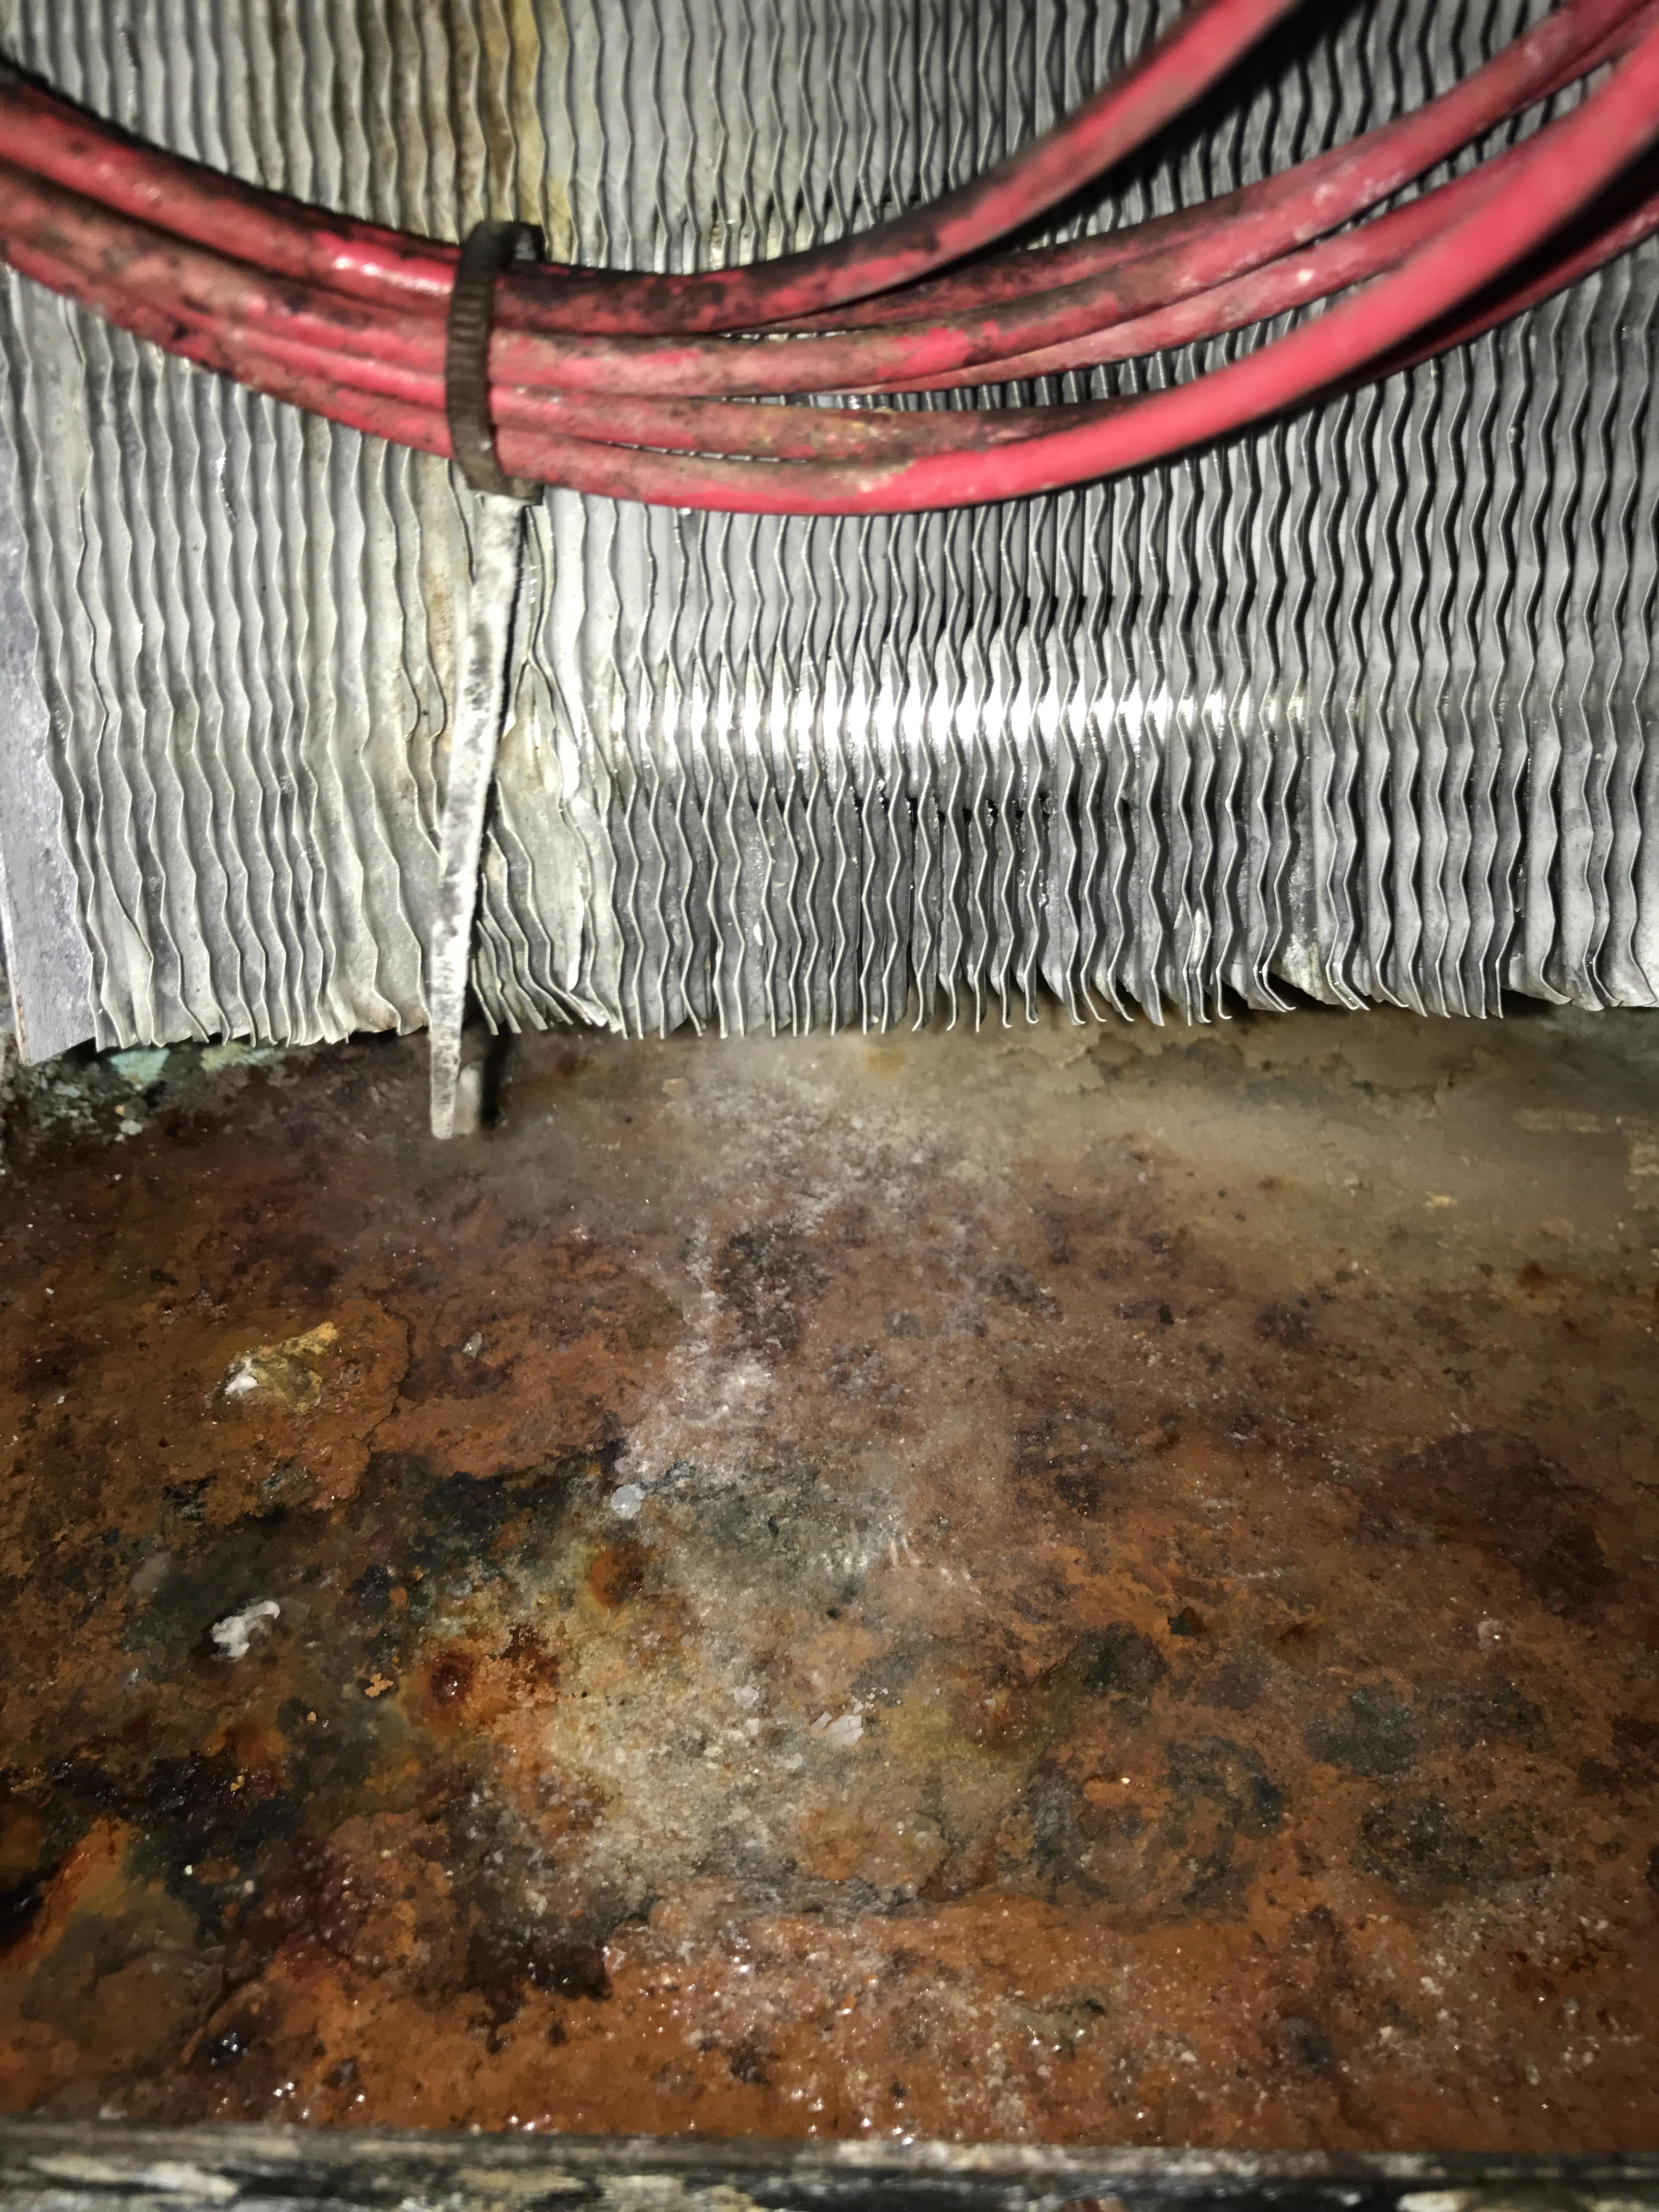 contaminated wires